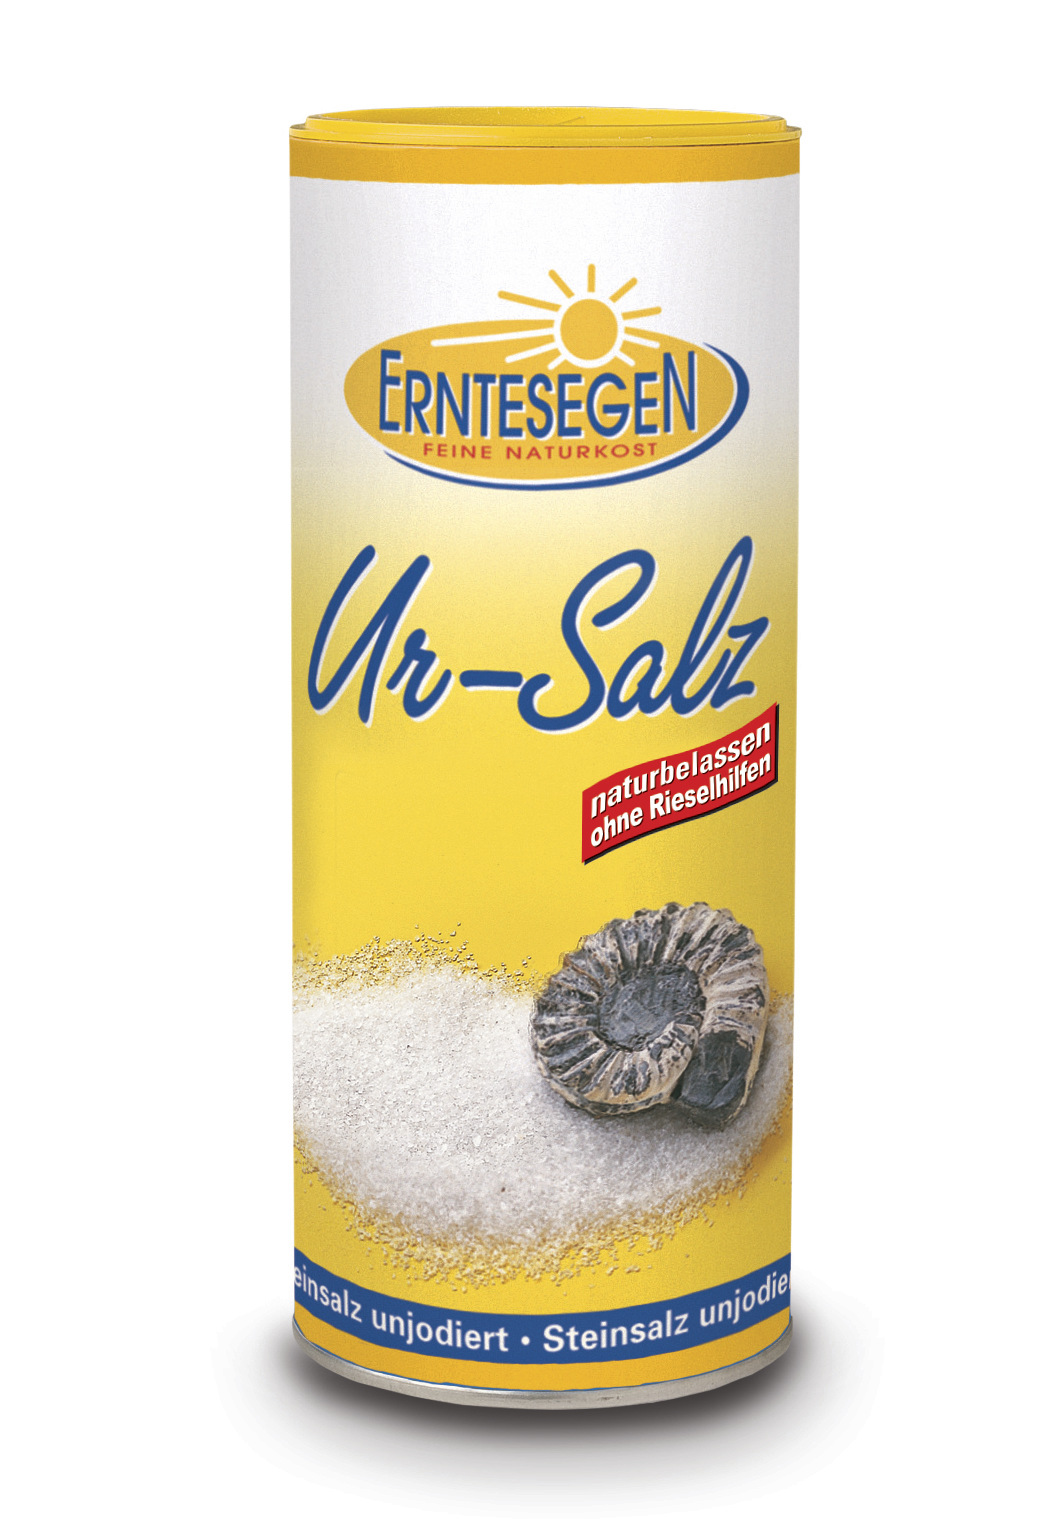 Erntesegen Ur-Salz Streudose 400 g